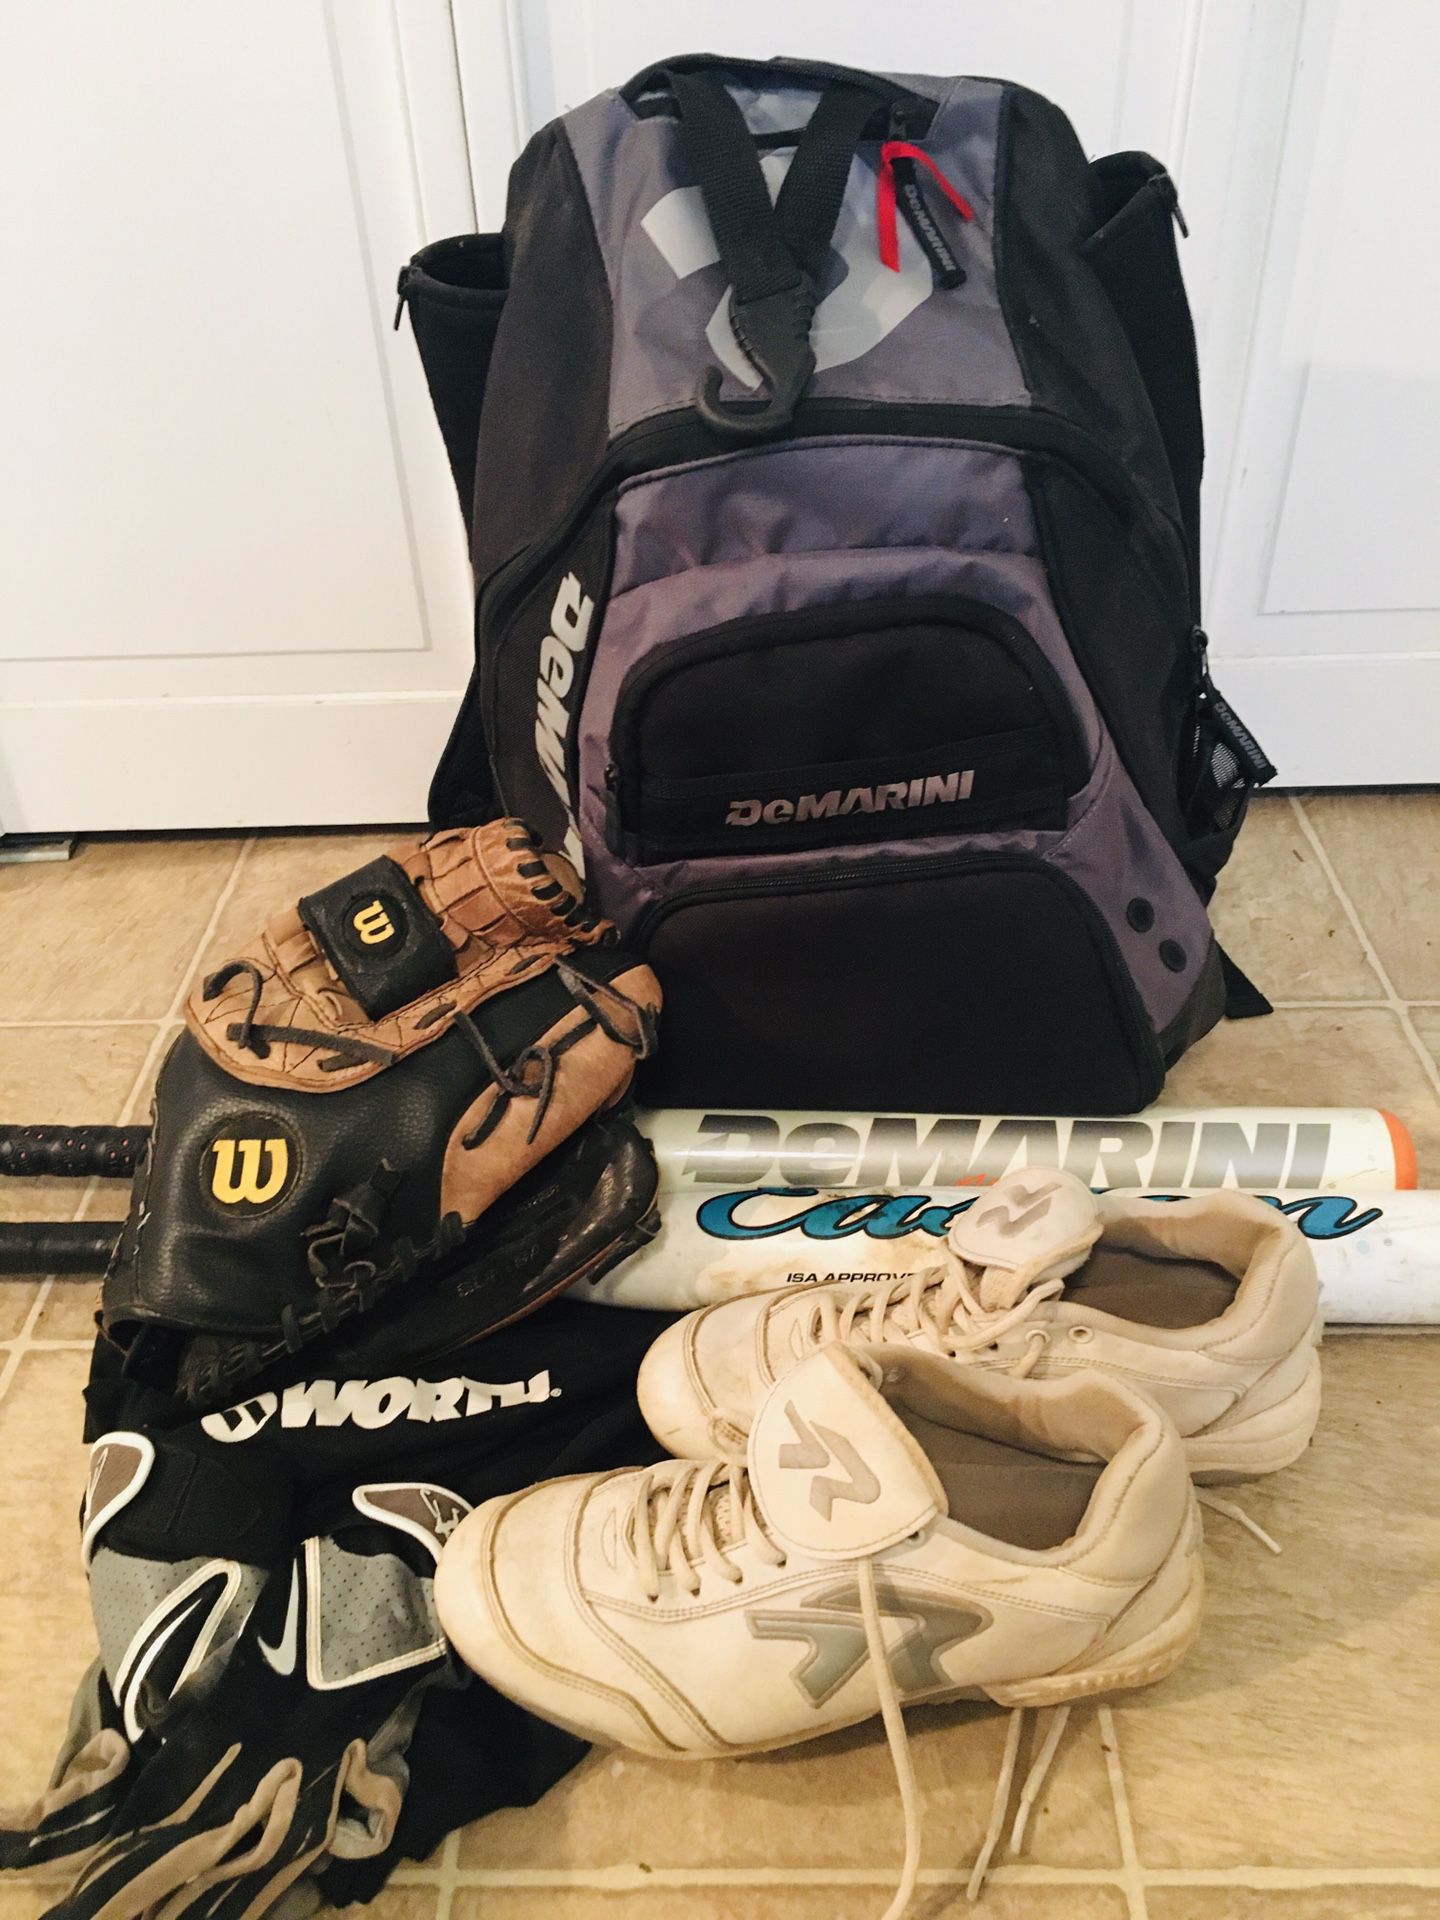 Fastpitch Softball Bat, Glove, Backpack, Cleats etc